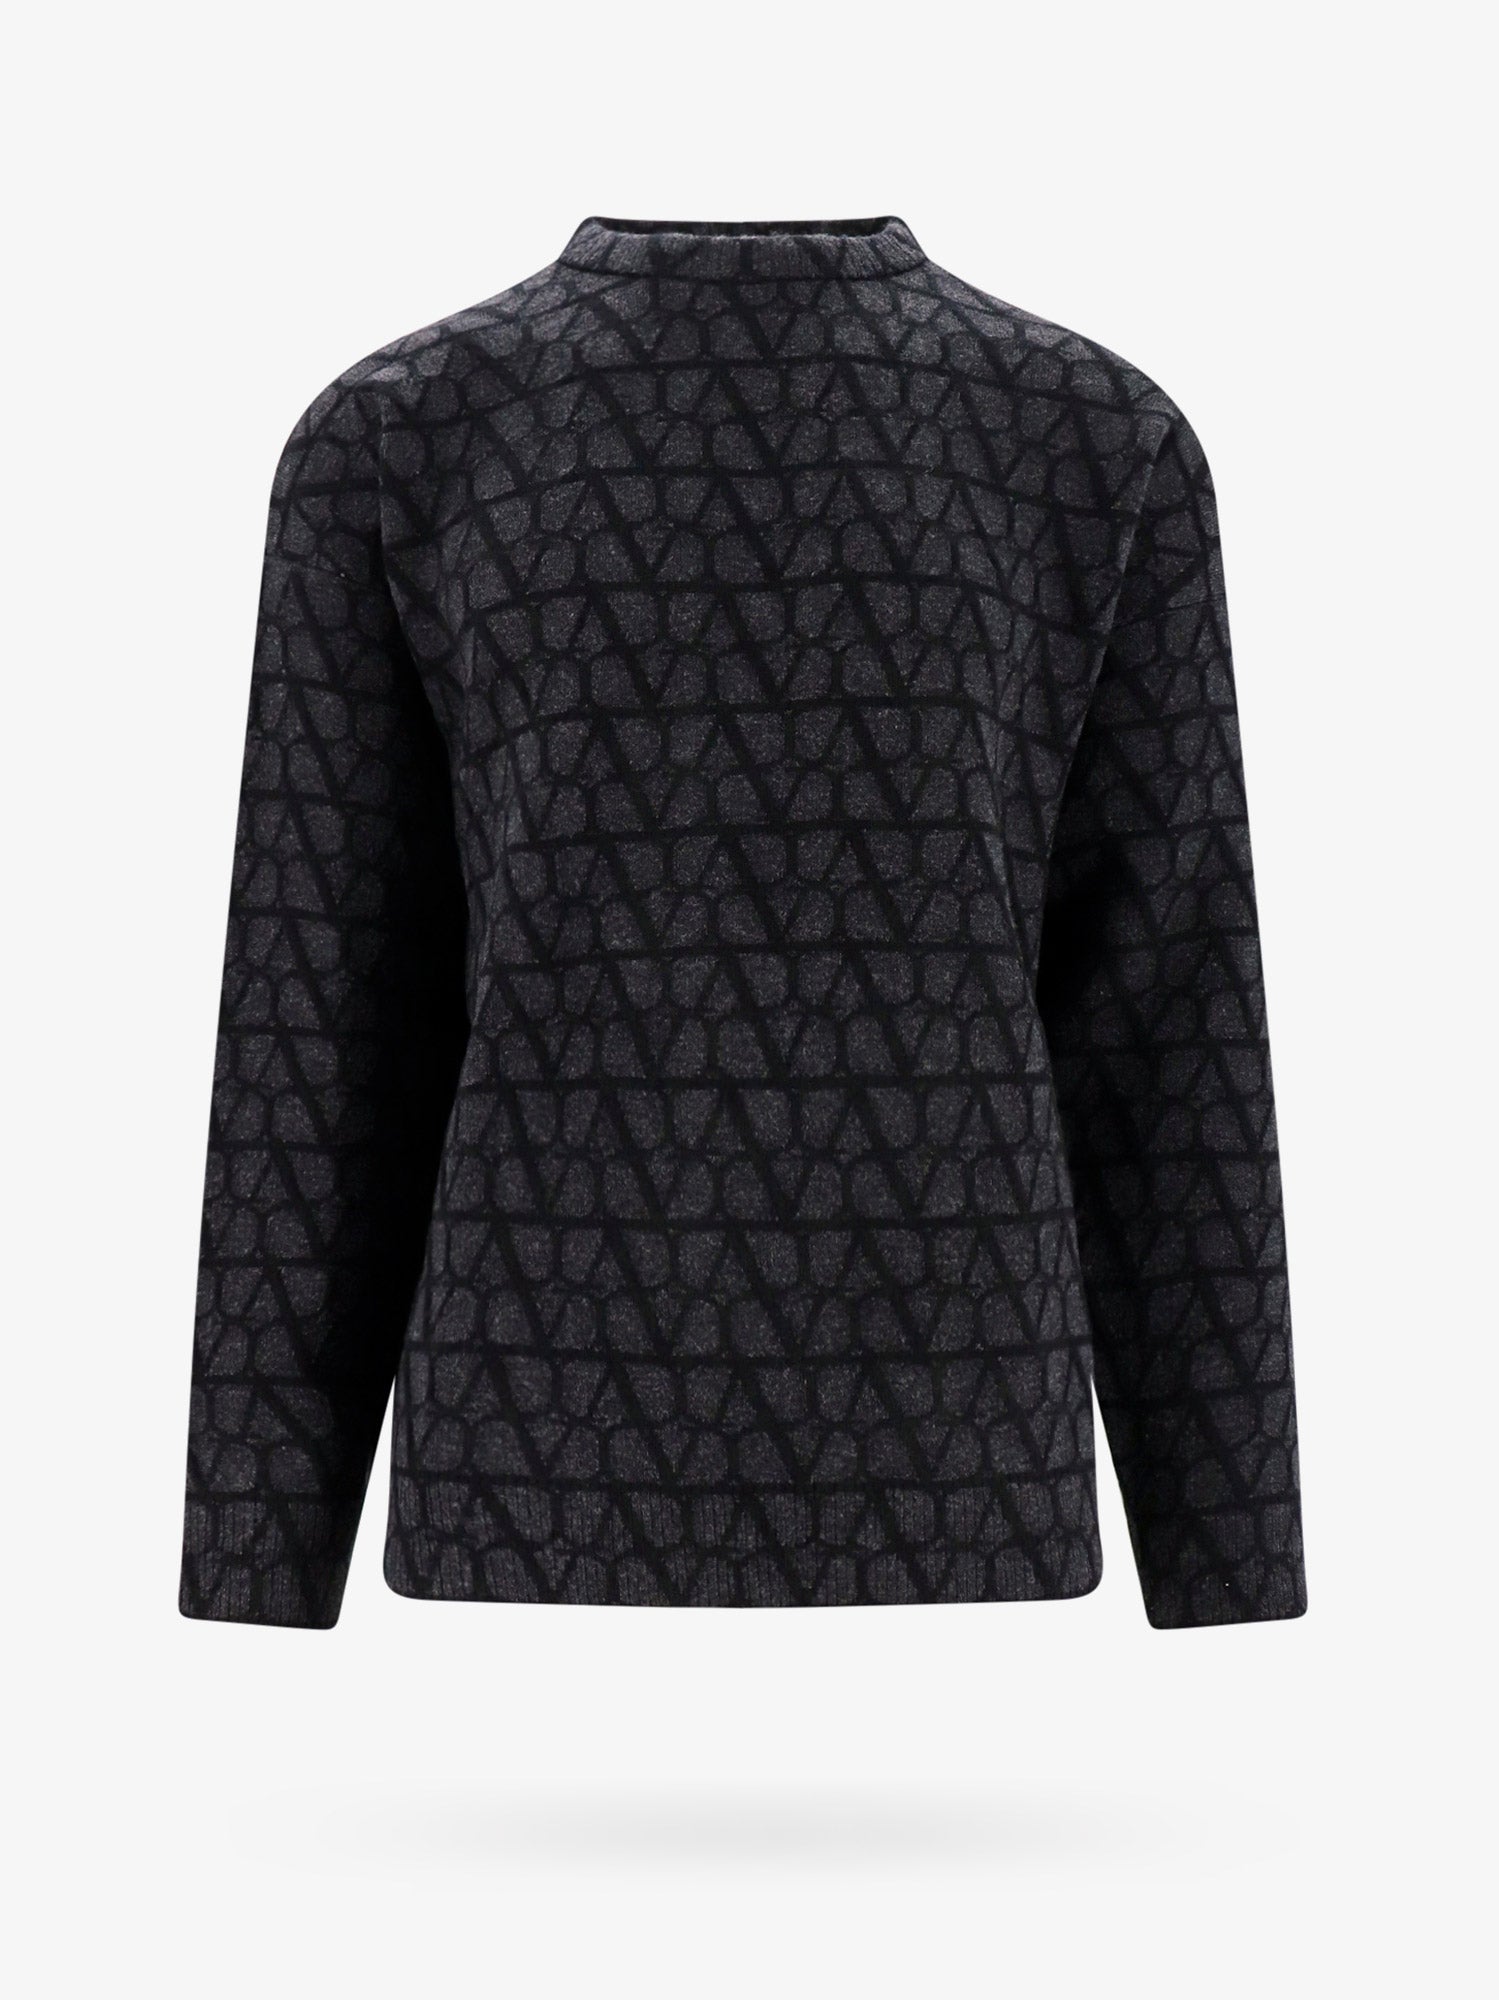 Valentino Cotton Jumpsuit with Toile Iconographe Print Man Beige/Black 48